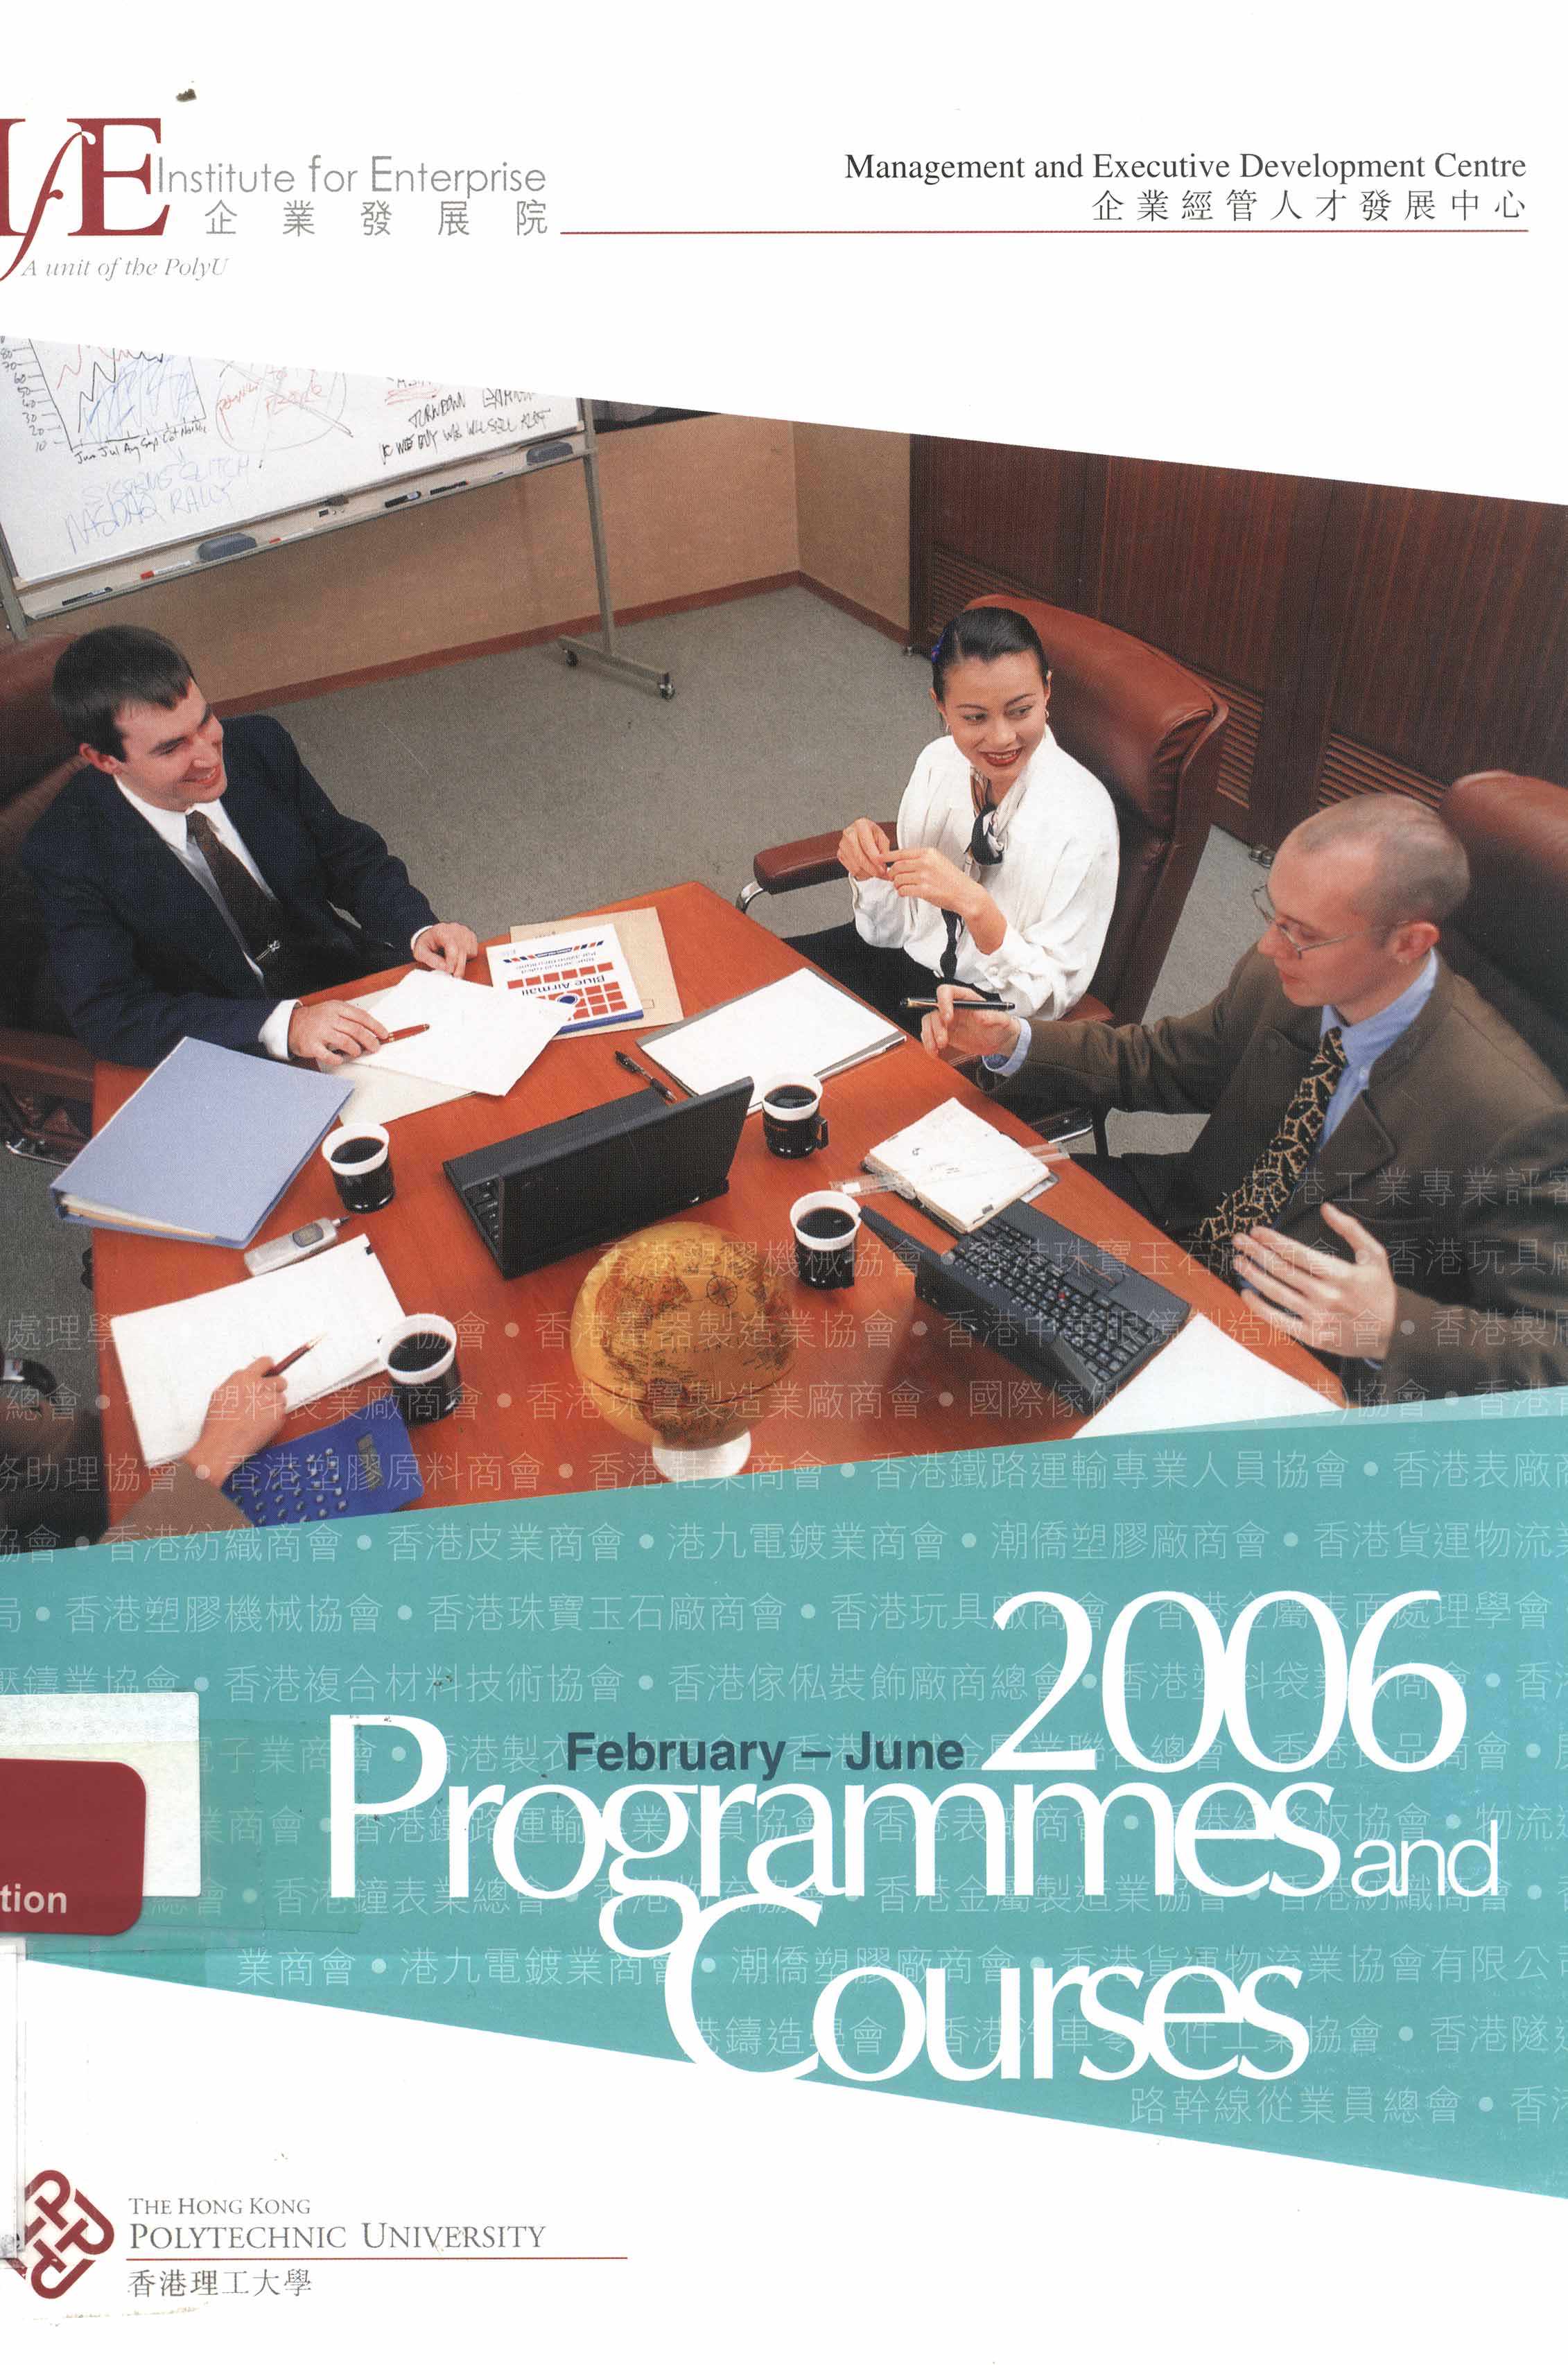 Institute for Enterprise: programmes and courses. Feb-June 2006